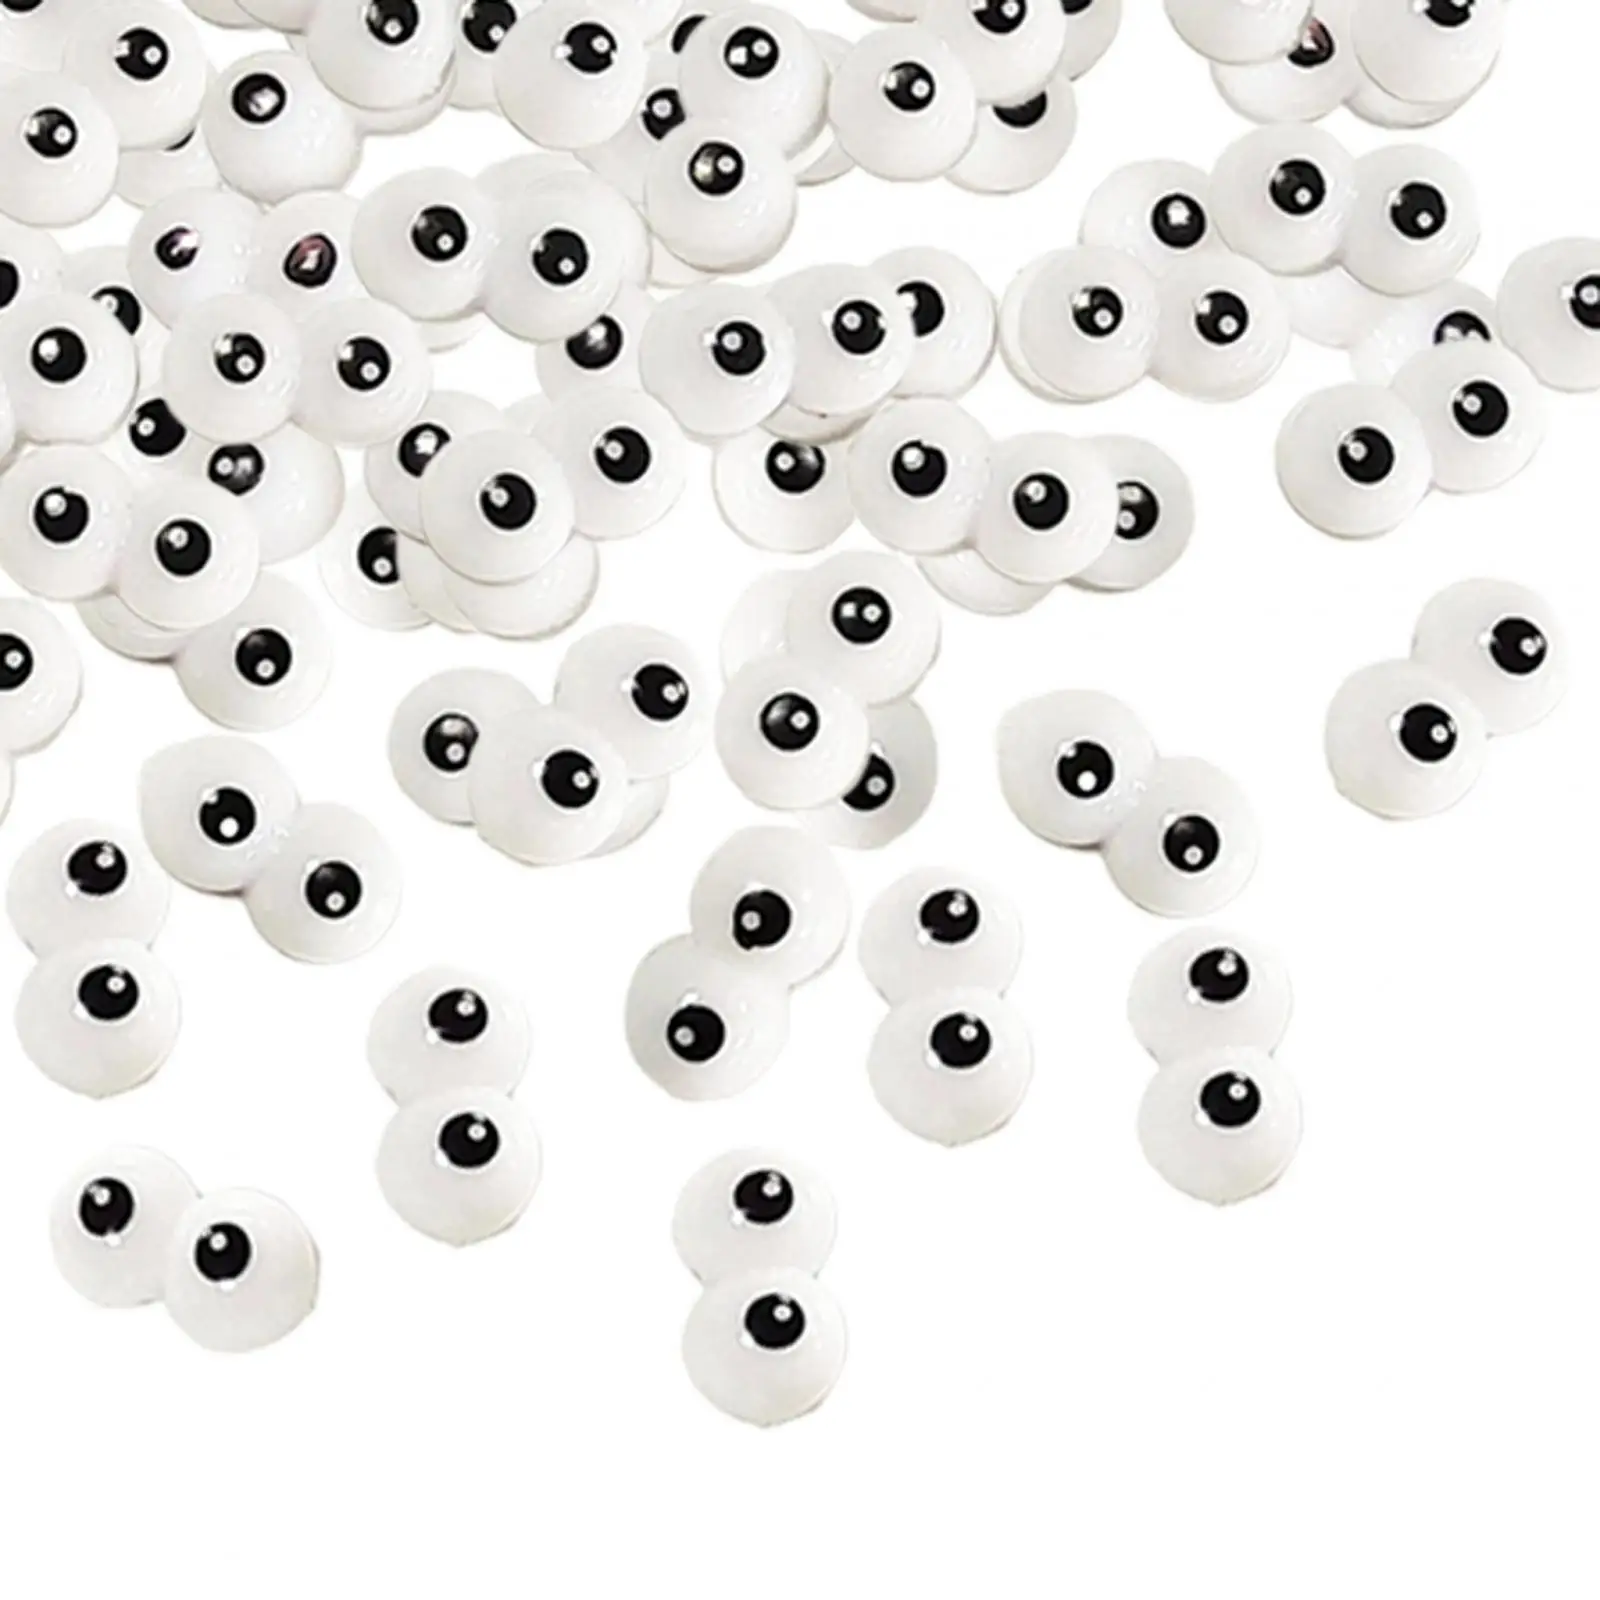 100 Pieces Siamese Eye Accessories Safety Eyes Sewing DIY Eyeballs Supplies Braid Decorating Doll Playset Accessories Decor